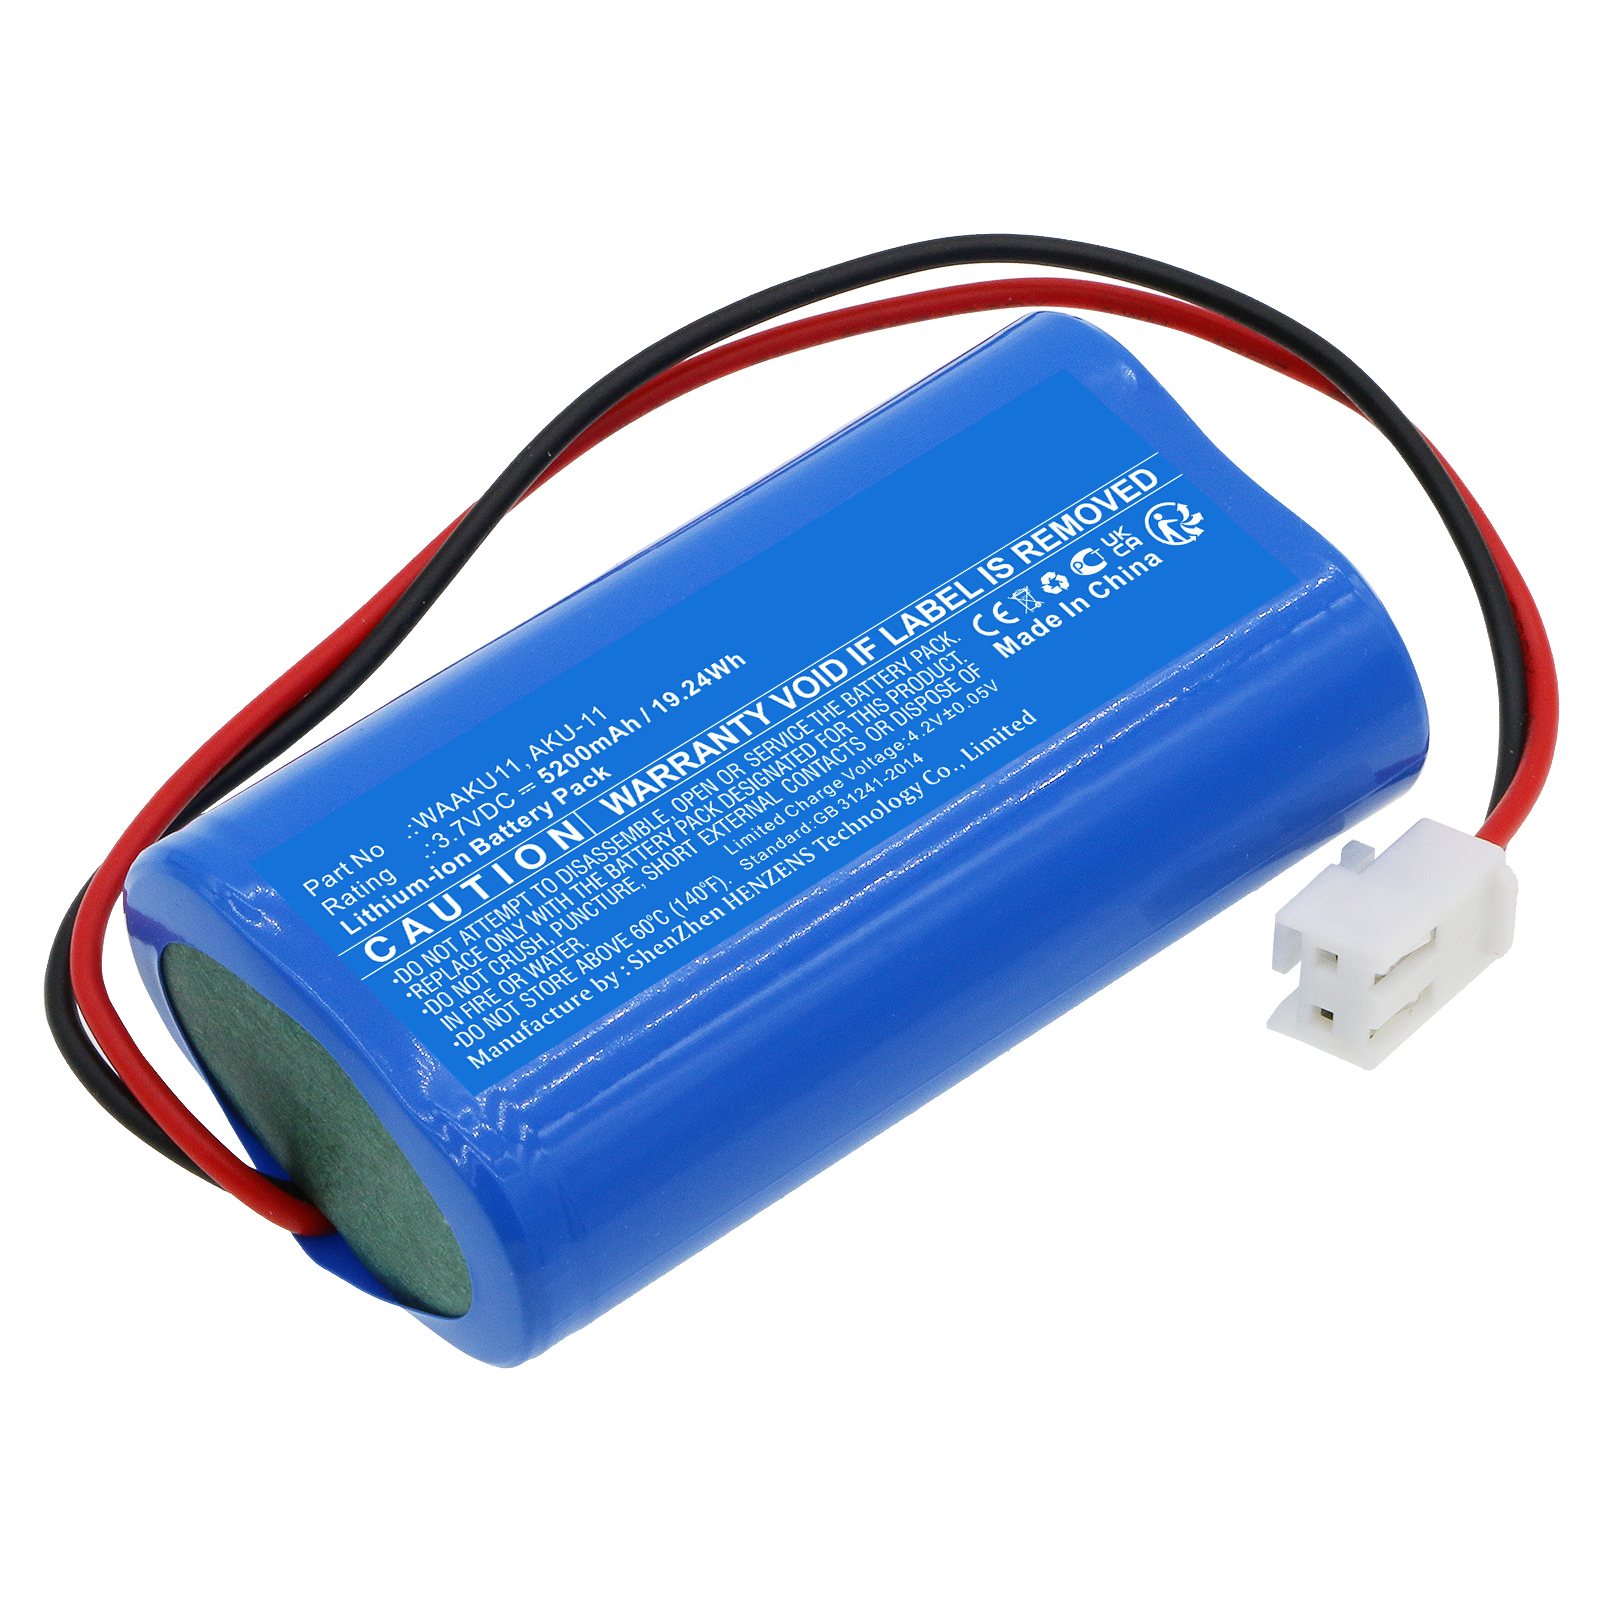 Batteries for SonelEquipment